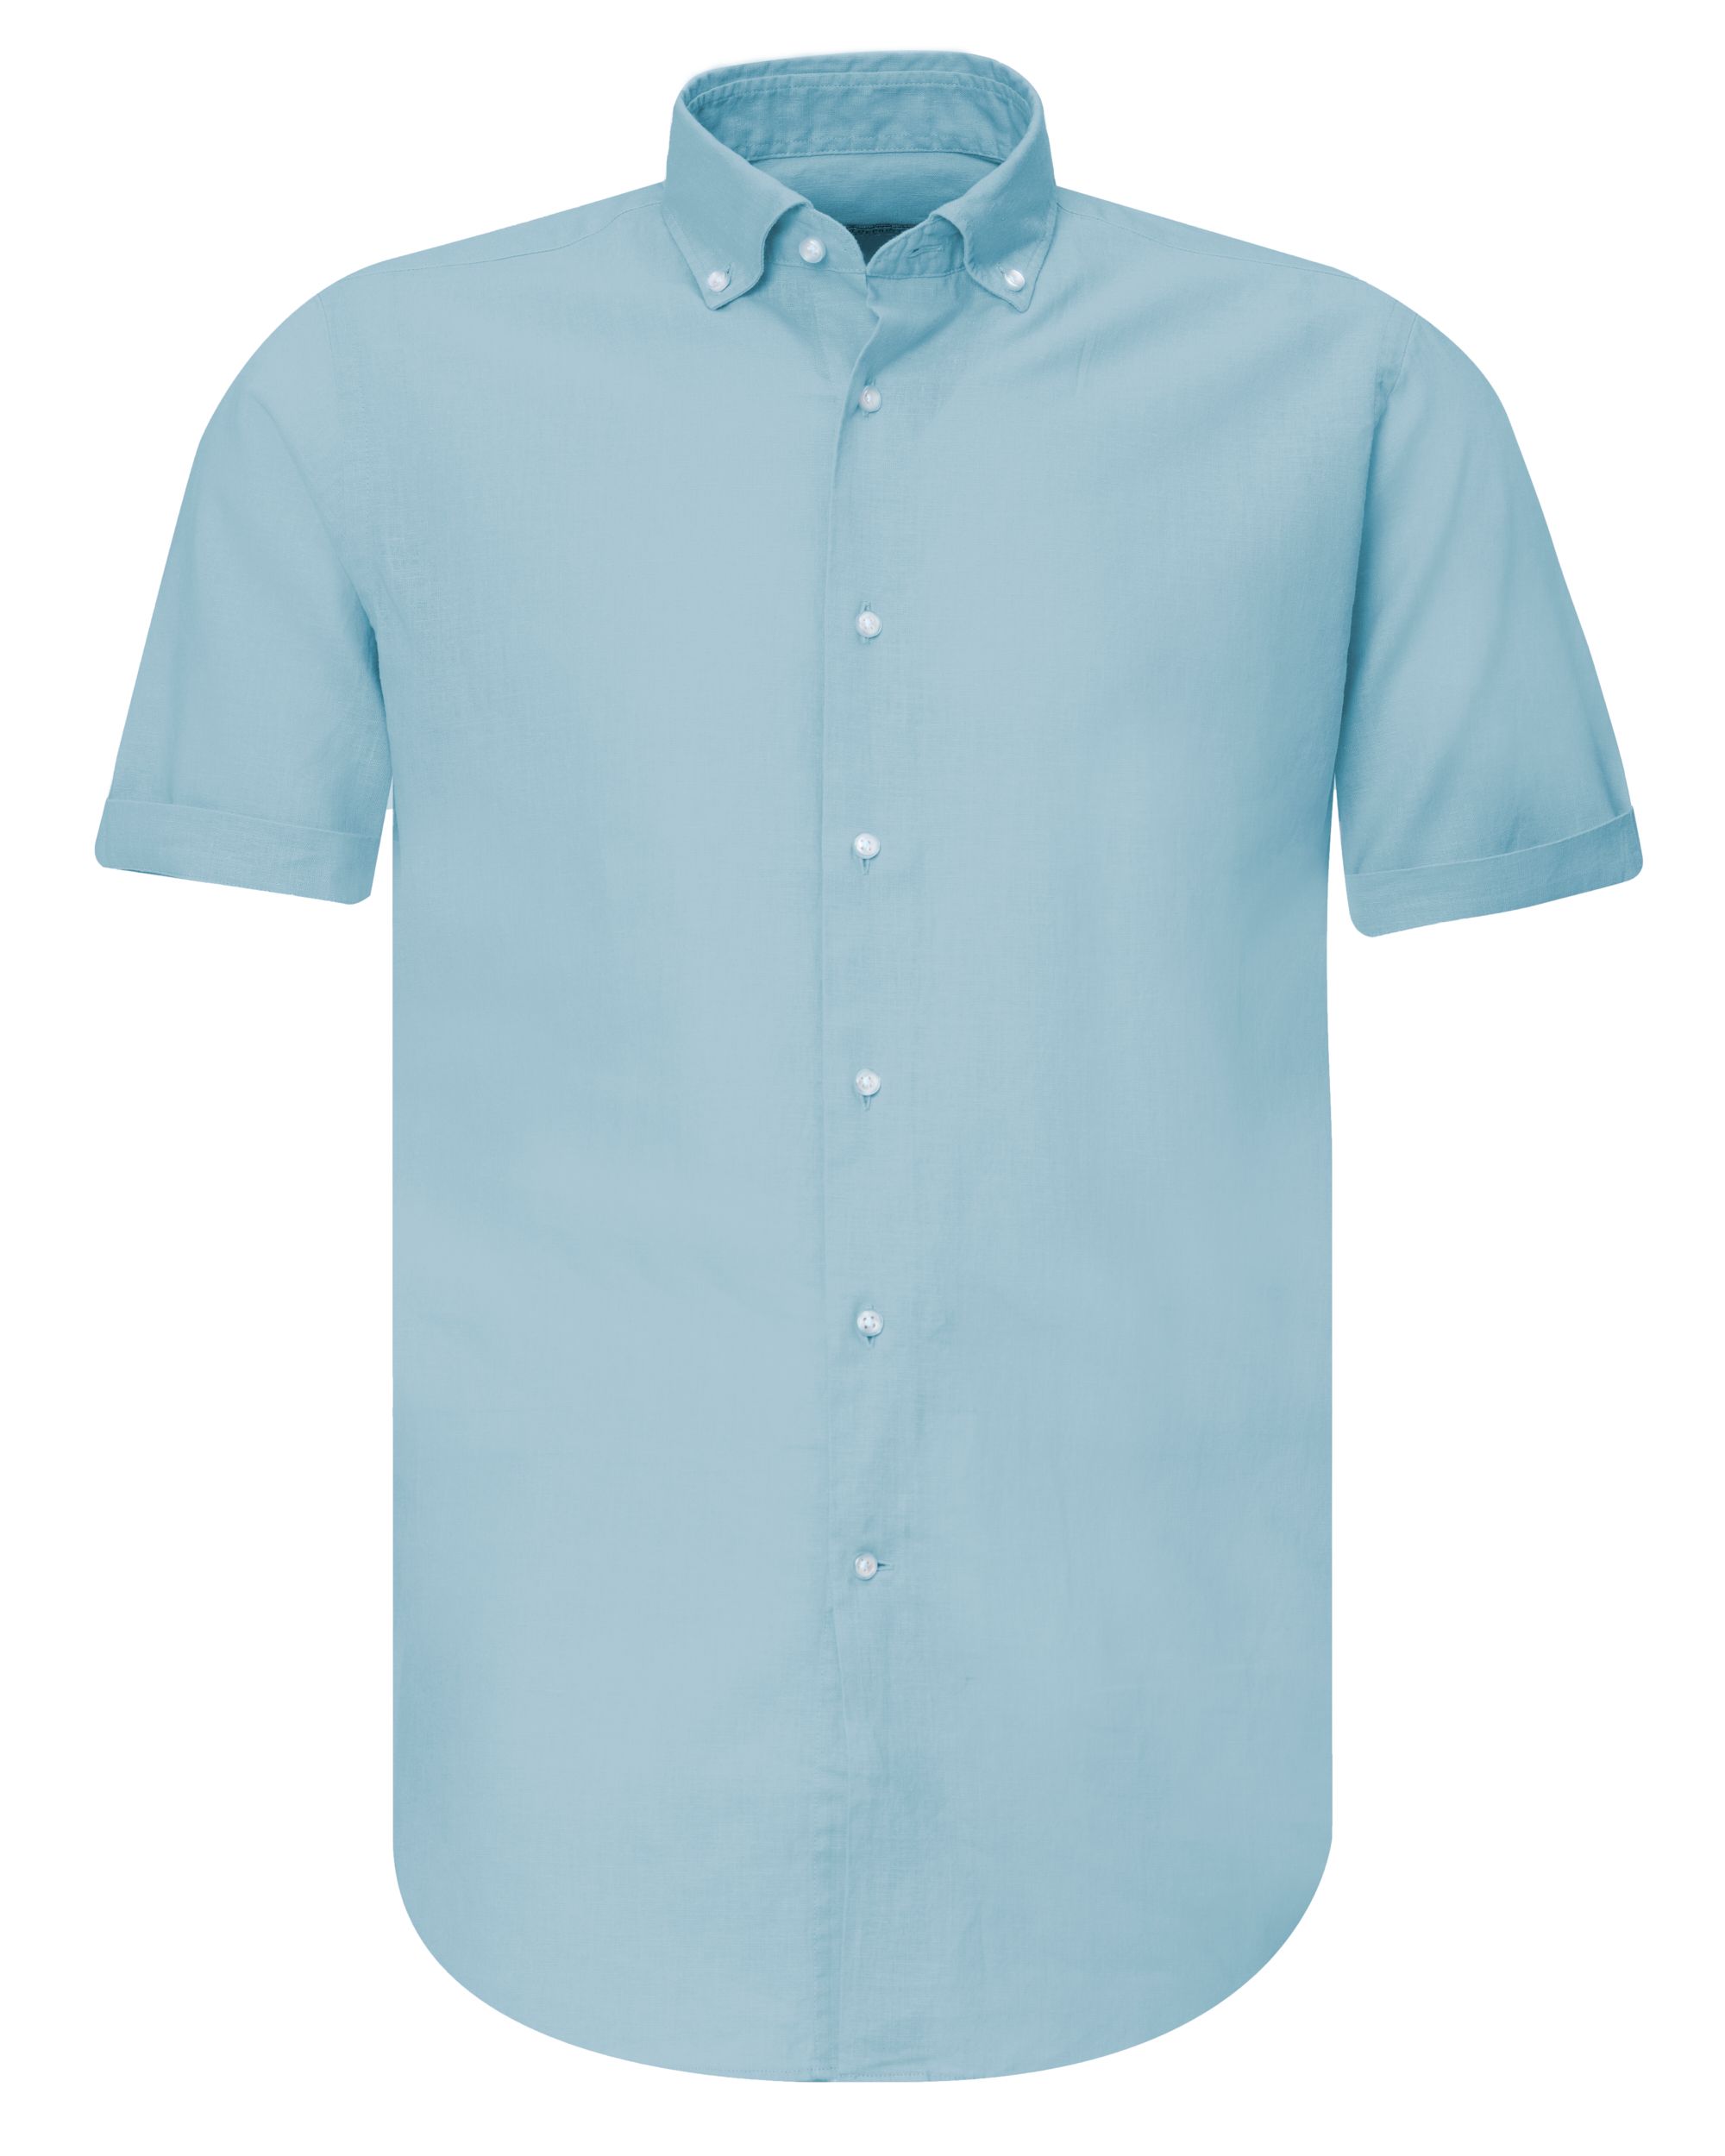 The BLUEPRINT Premium Casual Overhemd KM Blue Marine 077930-003-L